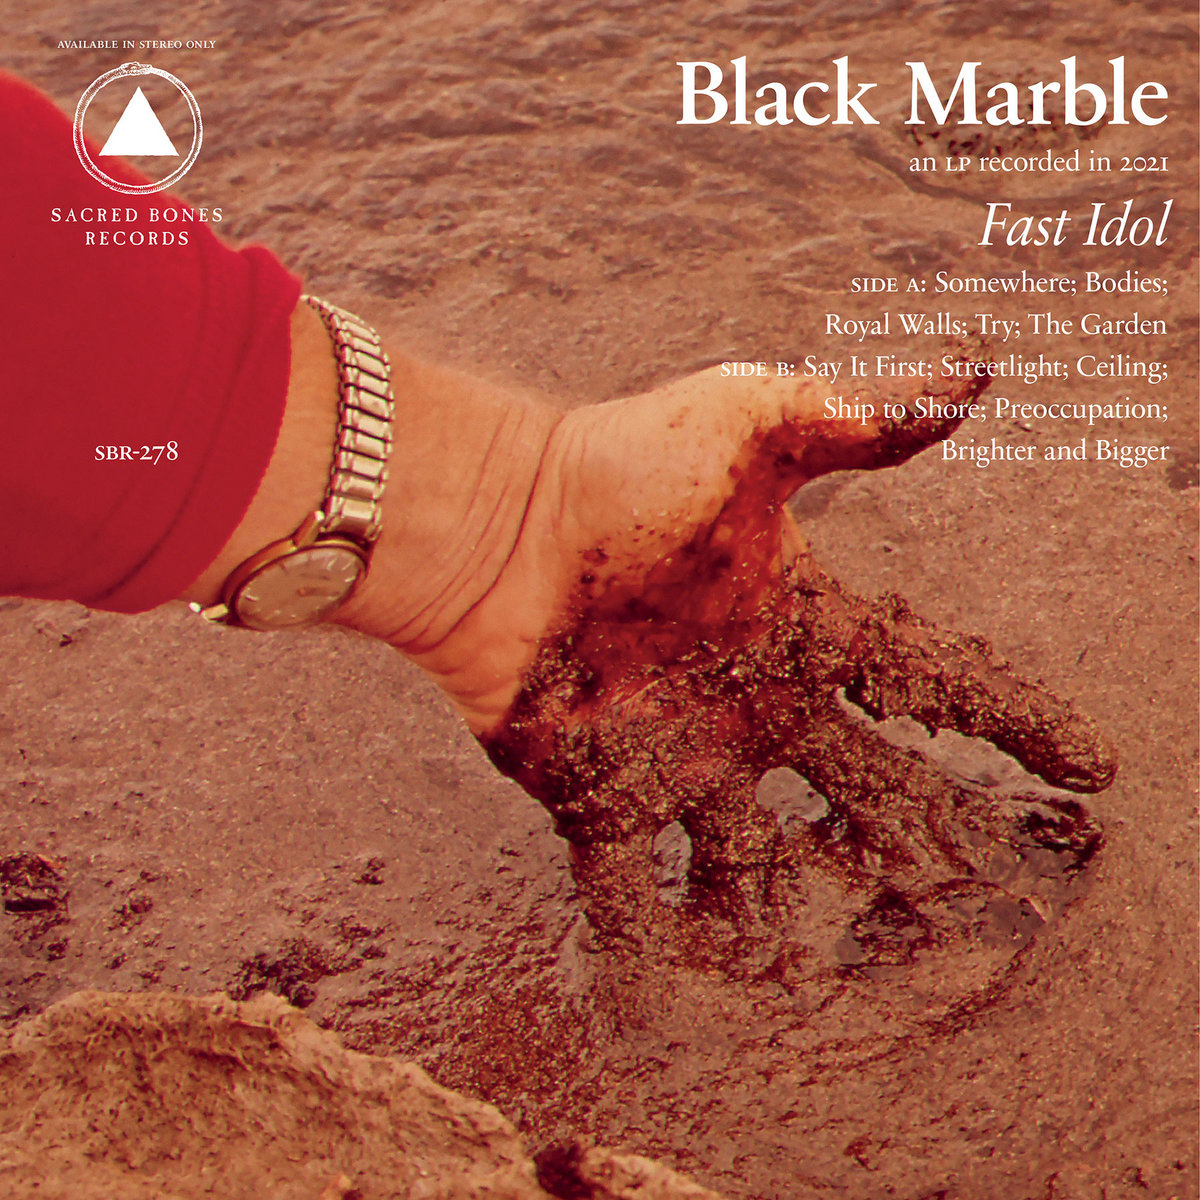 Black Marble 'Fast Idol'